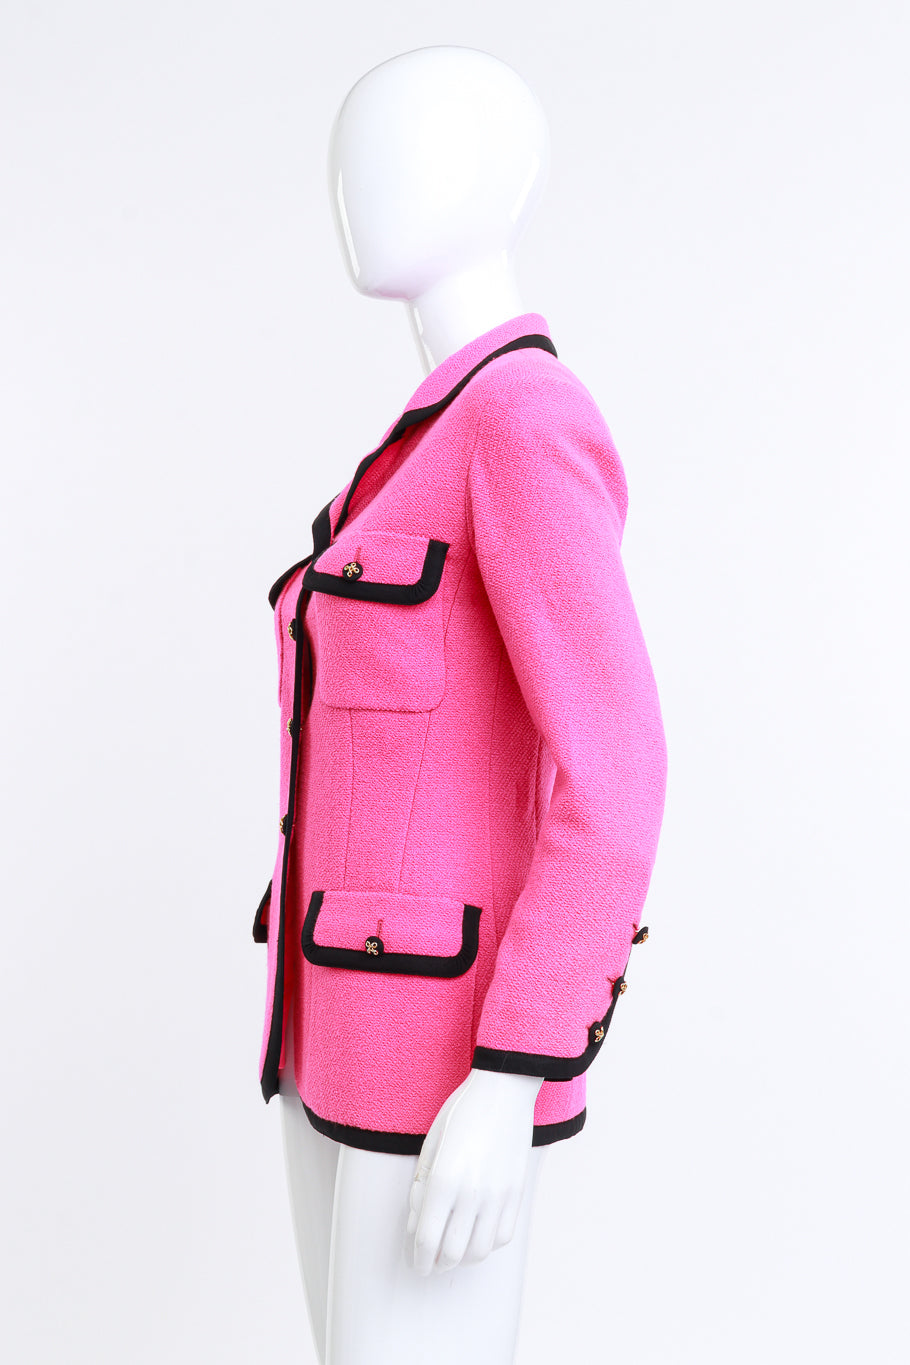 Chanel 1991 S/S Collection 25 Fuchsia Boucle Jacket side mannequin @RECESS LA